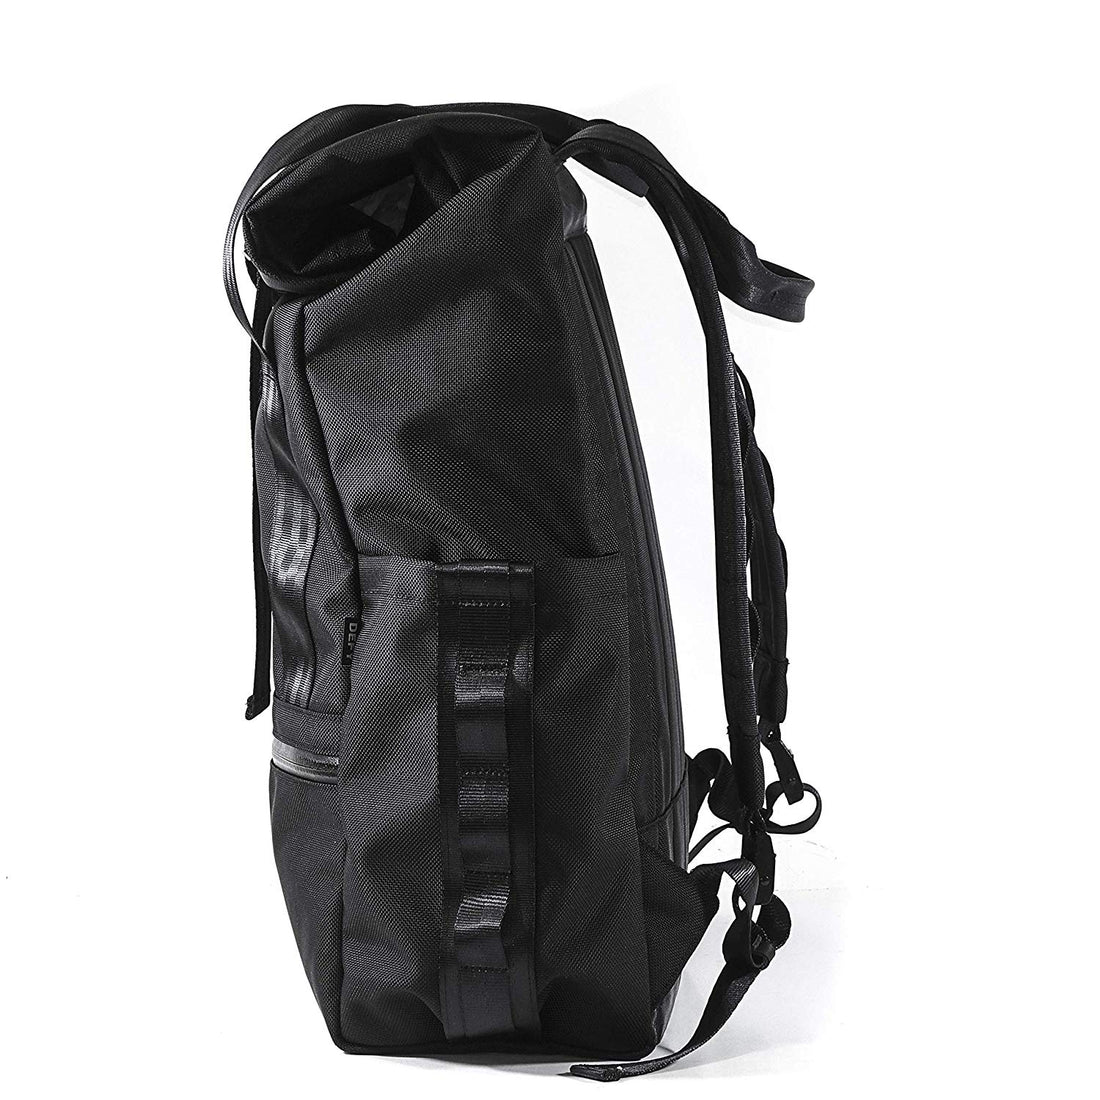 VerBockel Roll Top Backpack 2.0 'Un-Zipped' | Ballistic Nylon | Ships in 5-6 Weeks